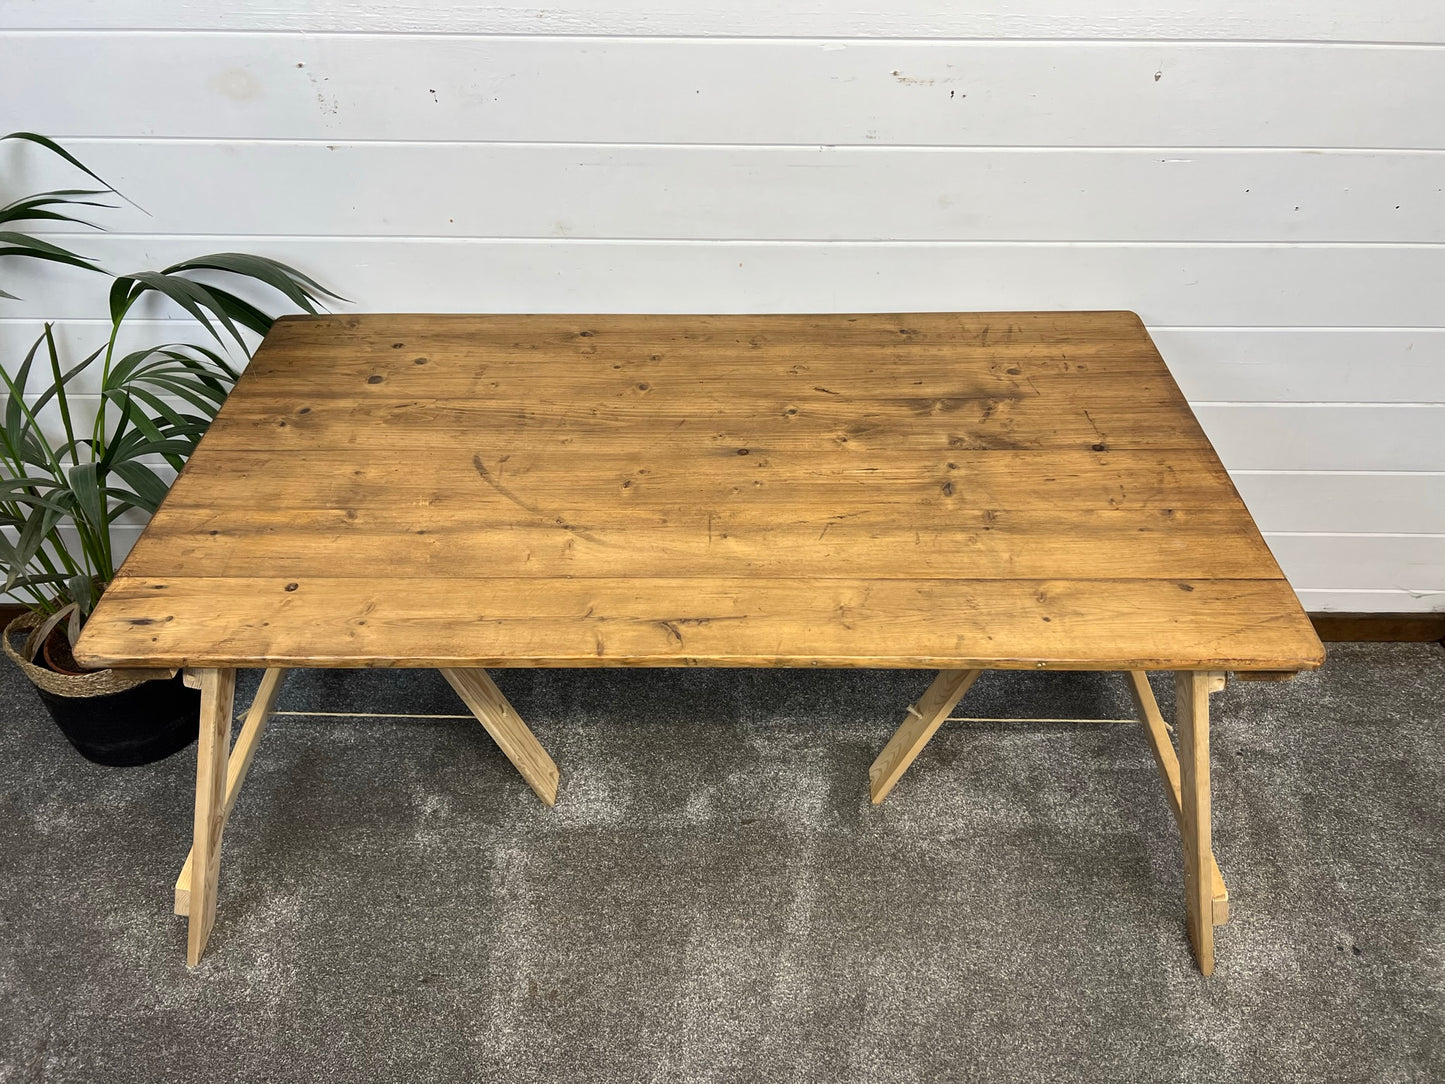 Vintage Rustic Wooden Trestle Table Desk Top Industrial Farmhouse Dining Garden Reclaimed